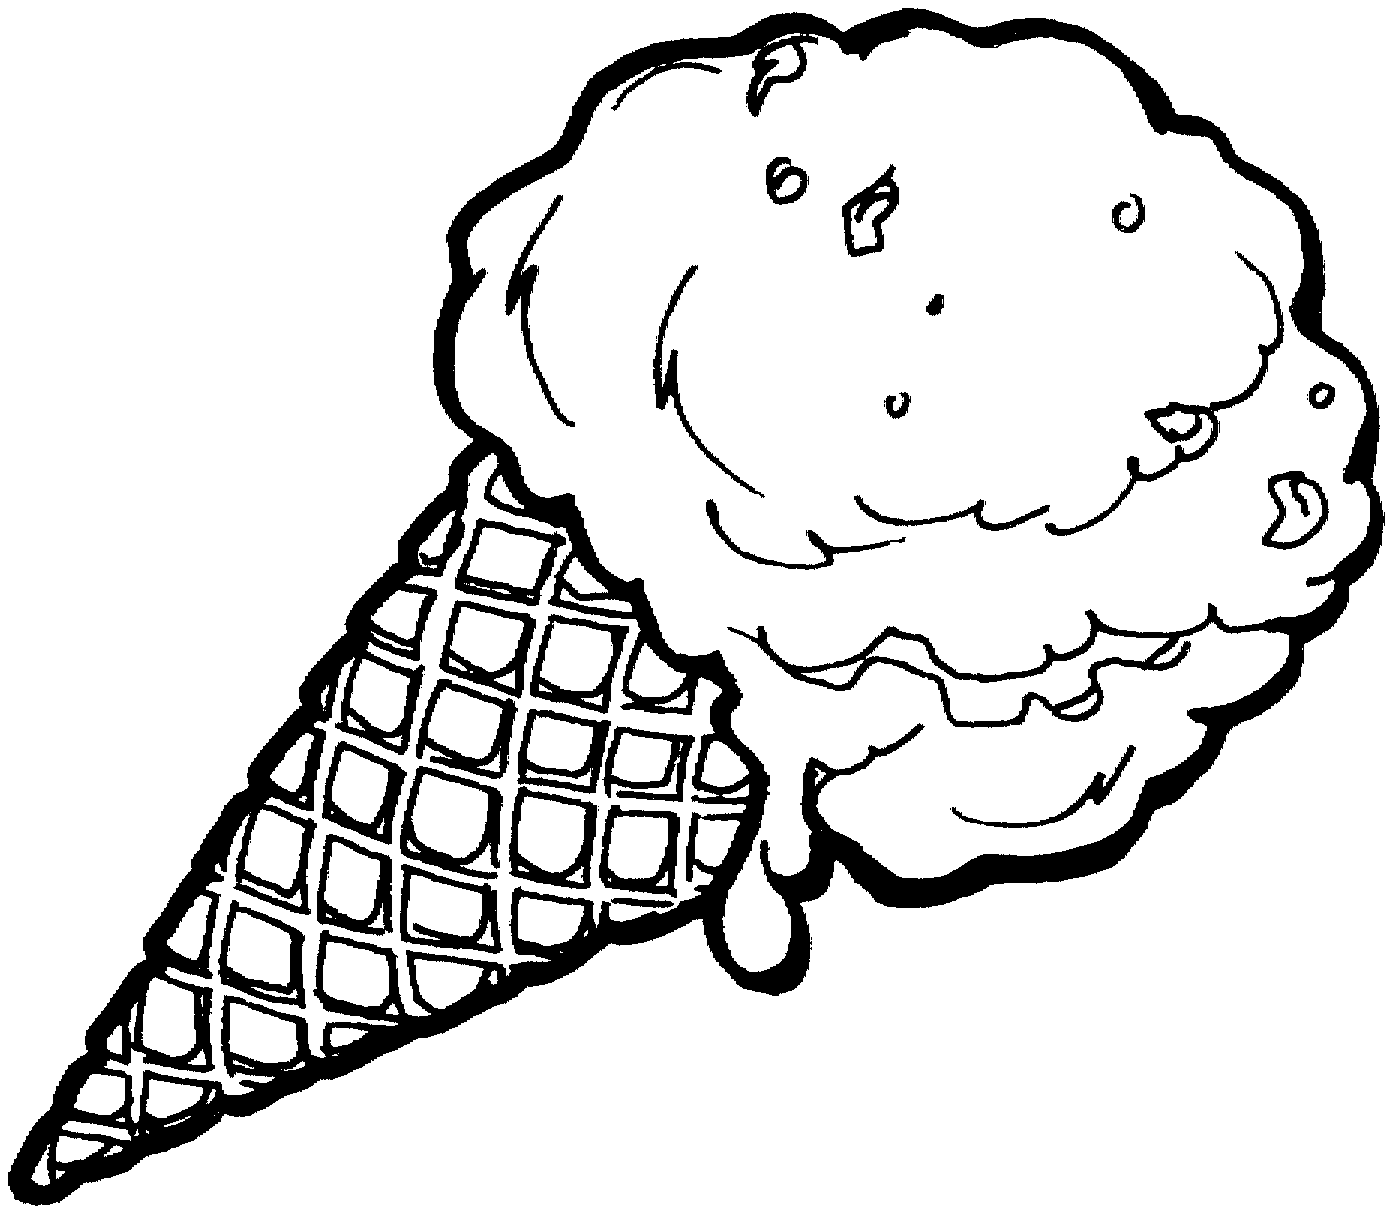 Free Ice Cream Cone Coloring Page, Download Free Ice Cream Cone ...